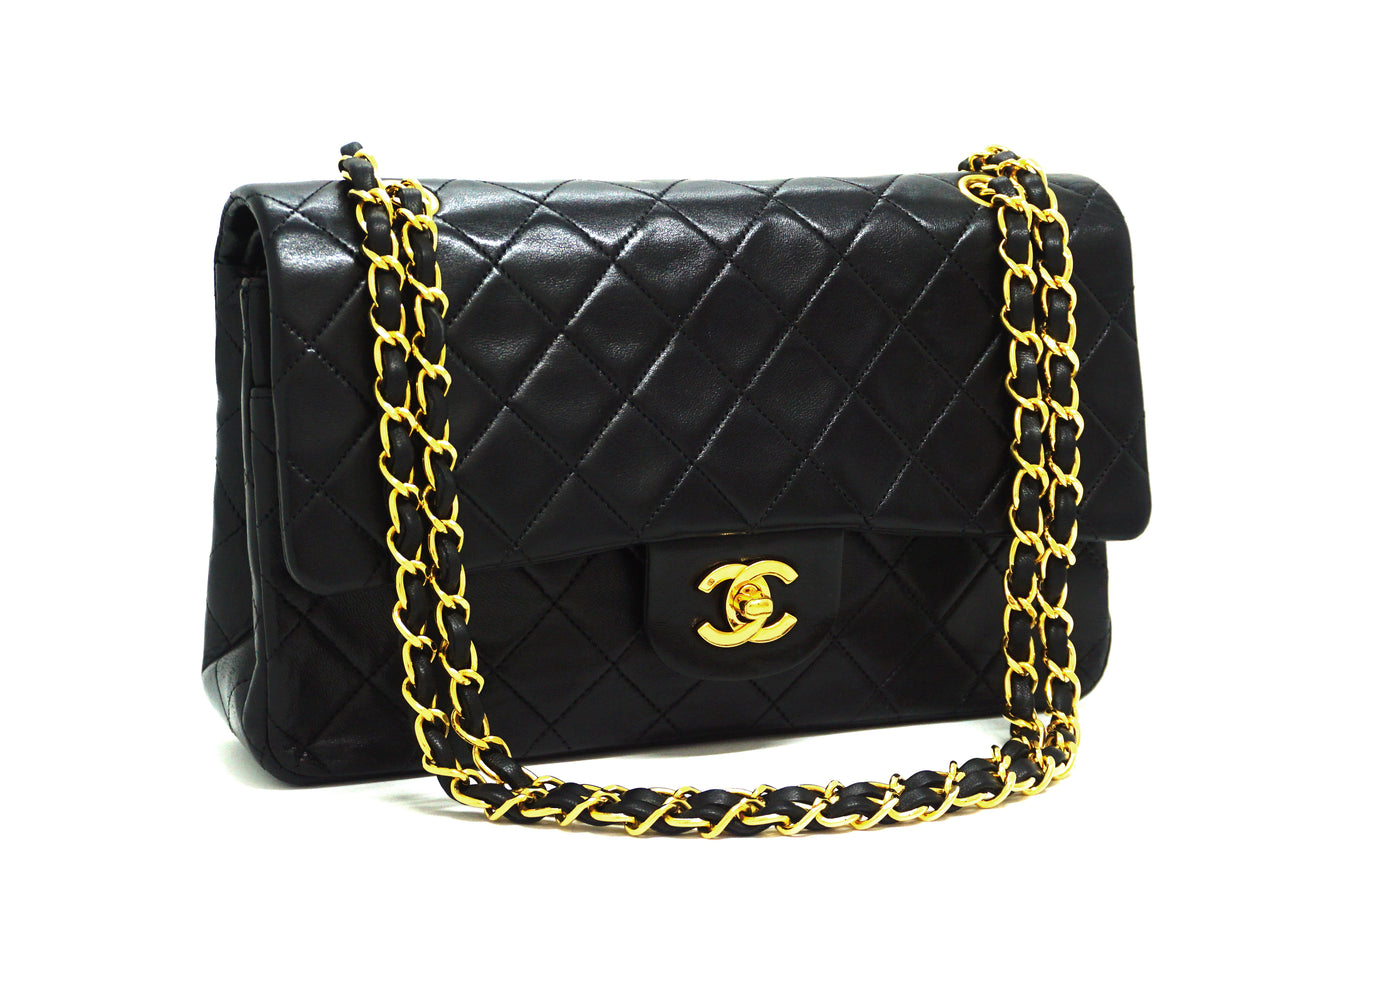 CHANEL Vintage Classic Black Lambskin 24K Gold Chain Medium Double Flap Bag